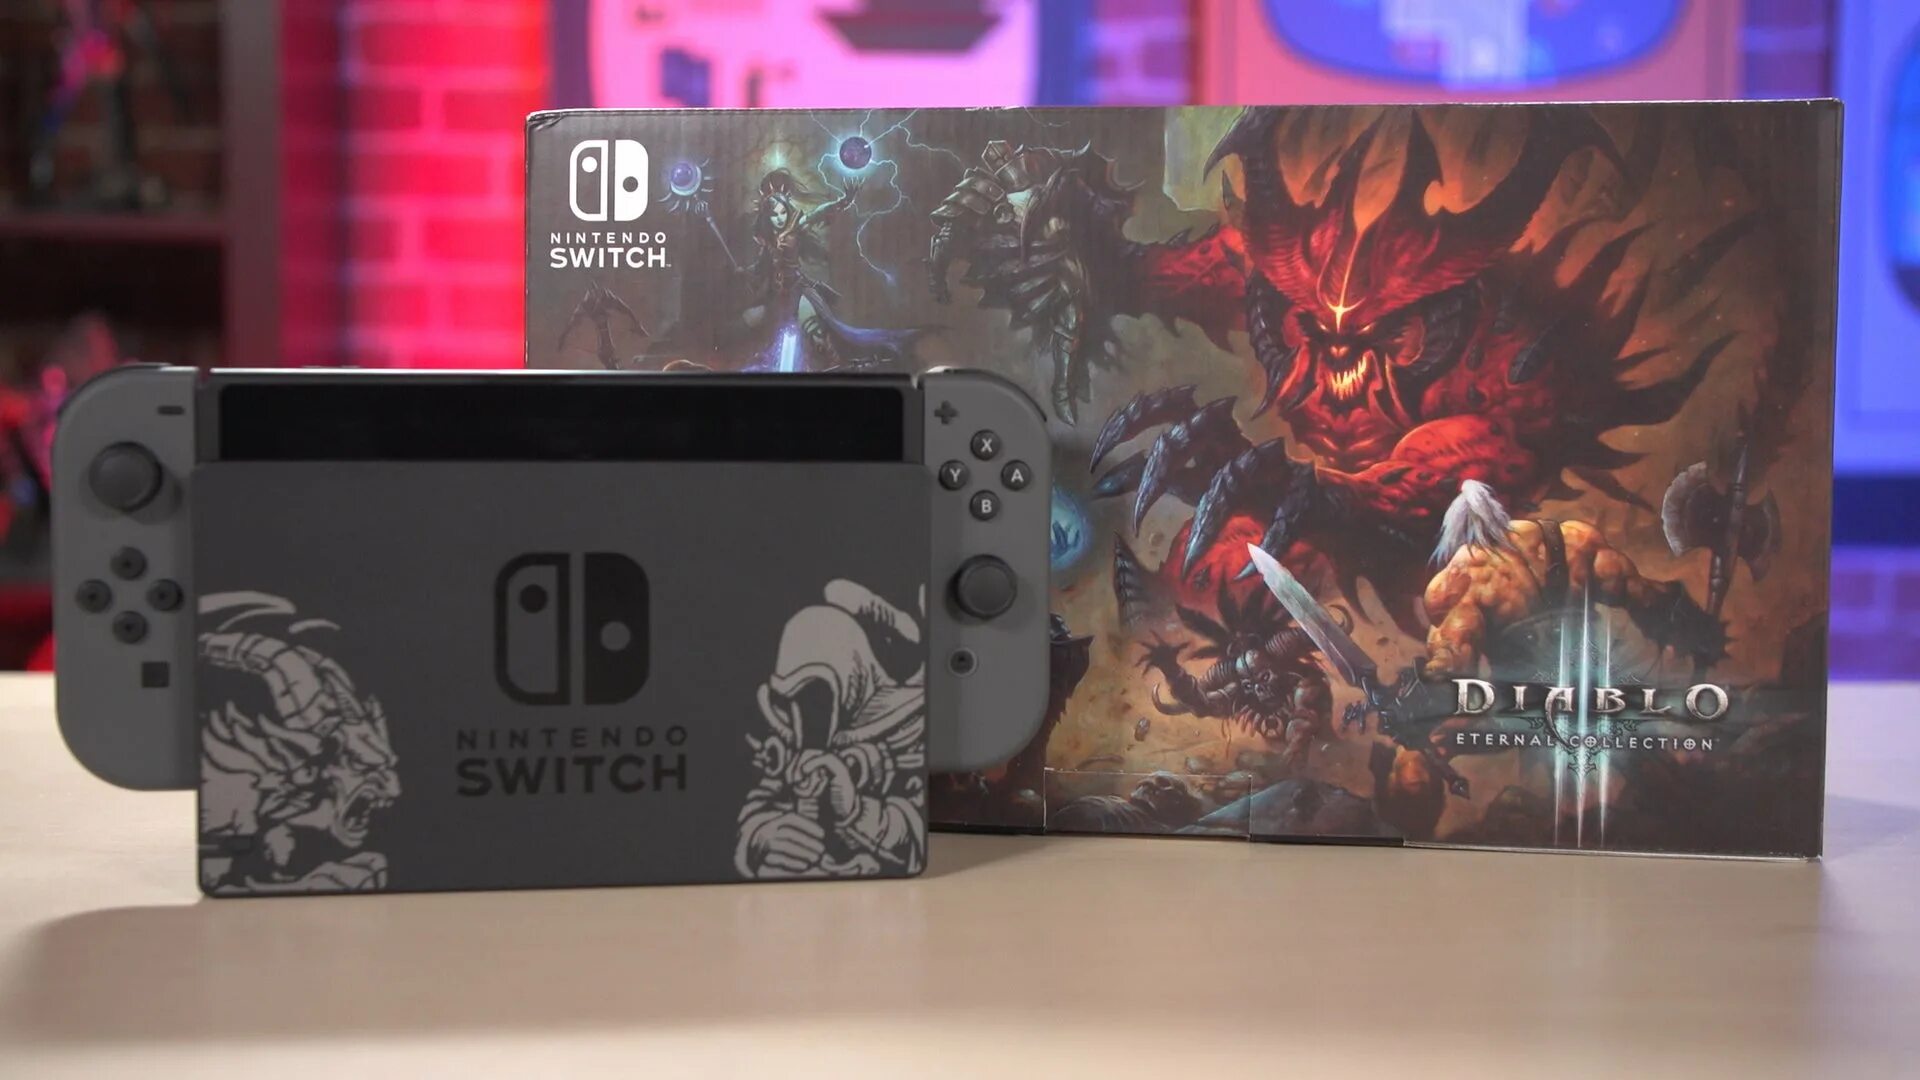 Игровая приставка Nintendo Switch Diablo III Limited Edition. Нинтендо свитч Limited Edition. Nintendo Switch Diablo 3 Limited Edition. Диабло на Нинтендо свитч. Eternal nintendo switch